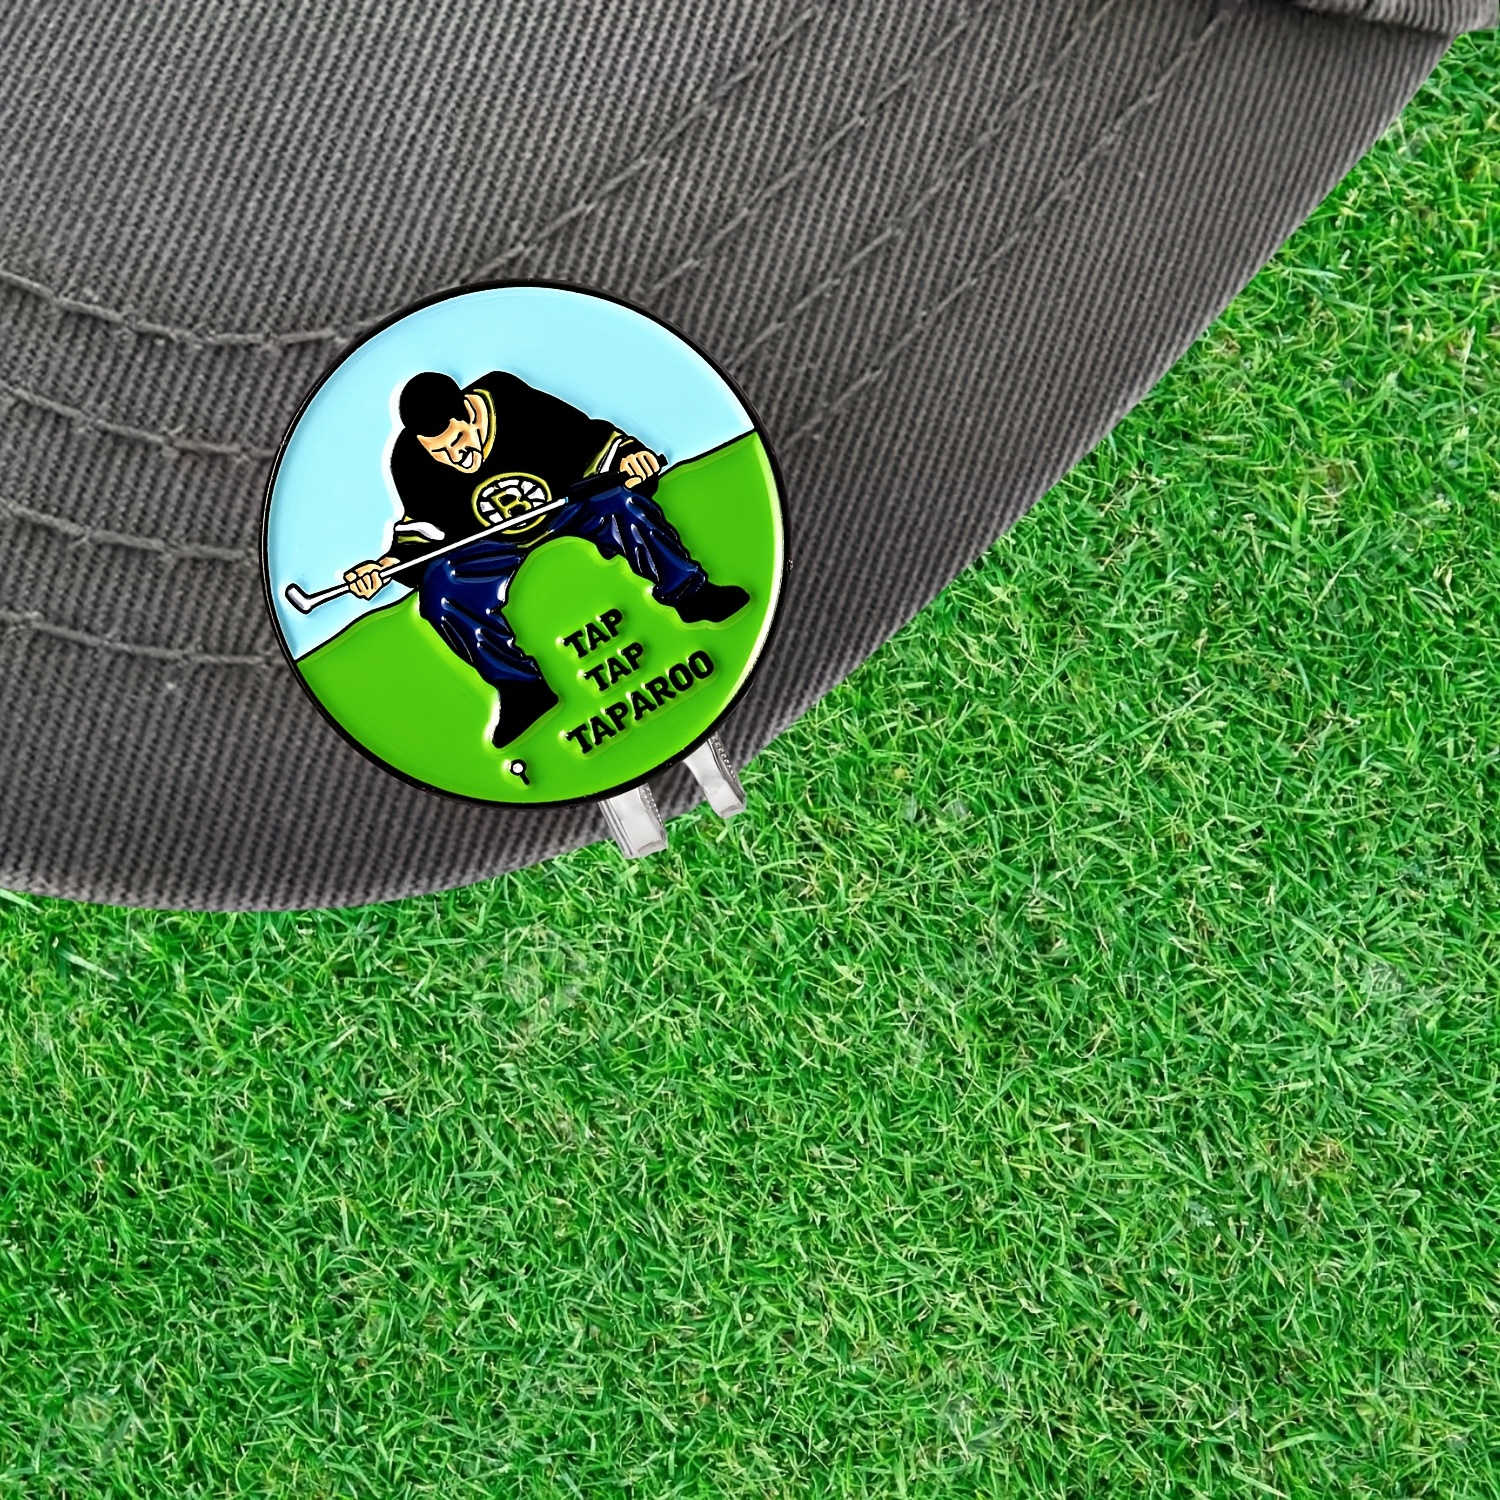 Artpreti Golf Ball Marker with a Standard Magnetic Hat Clip, Funny Golf  Ball Marker Hat Clip